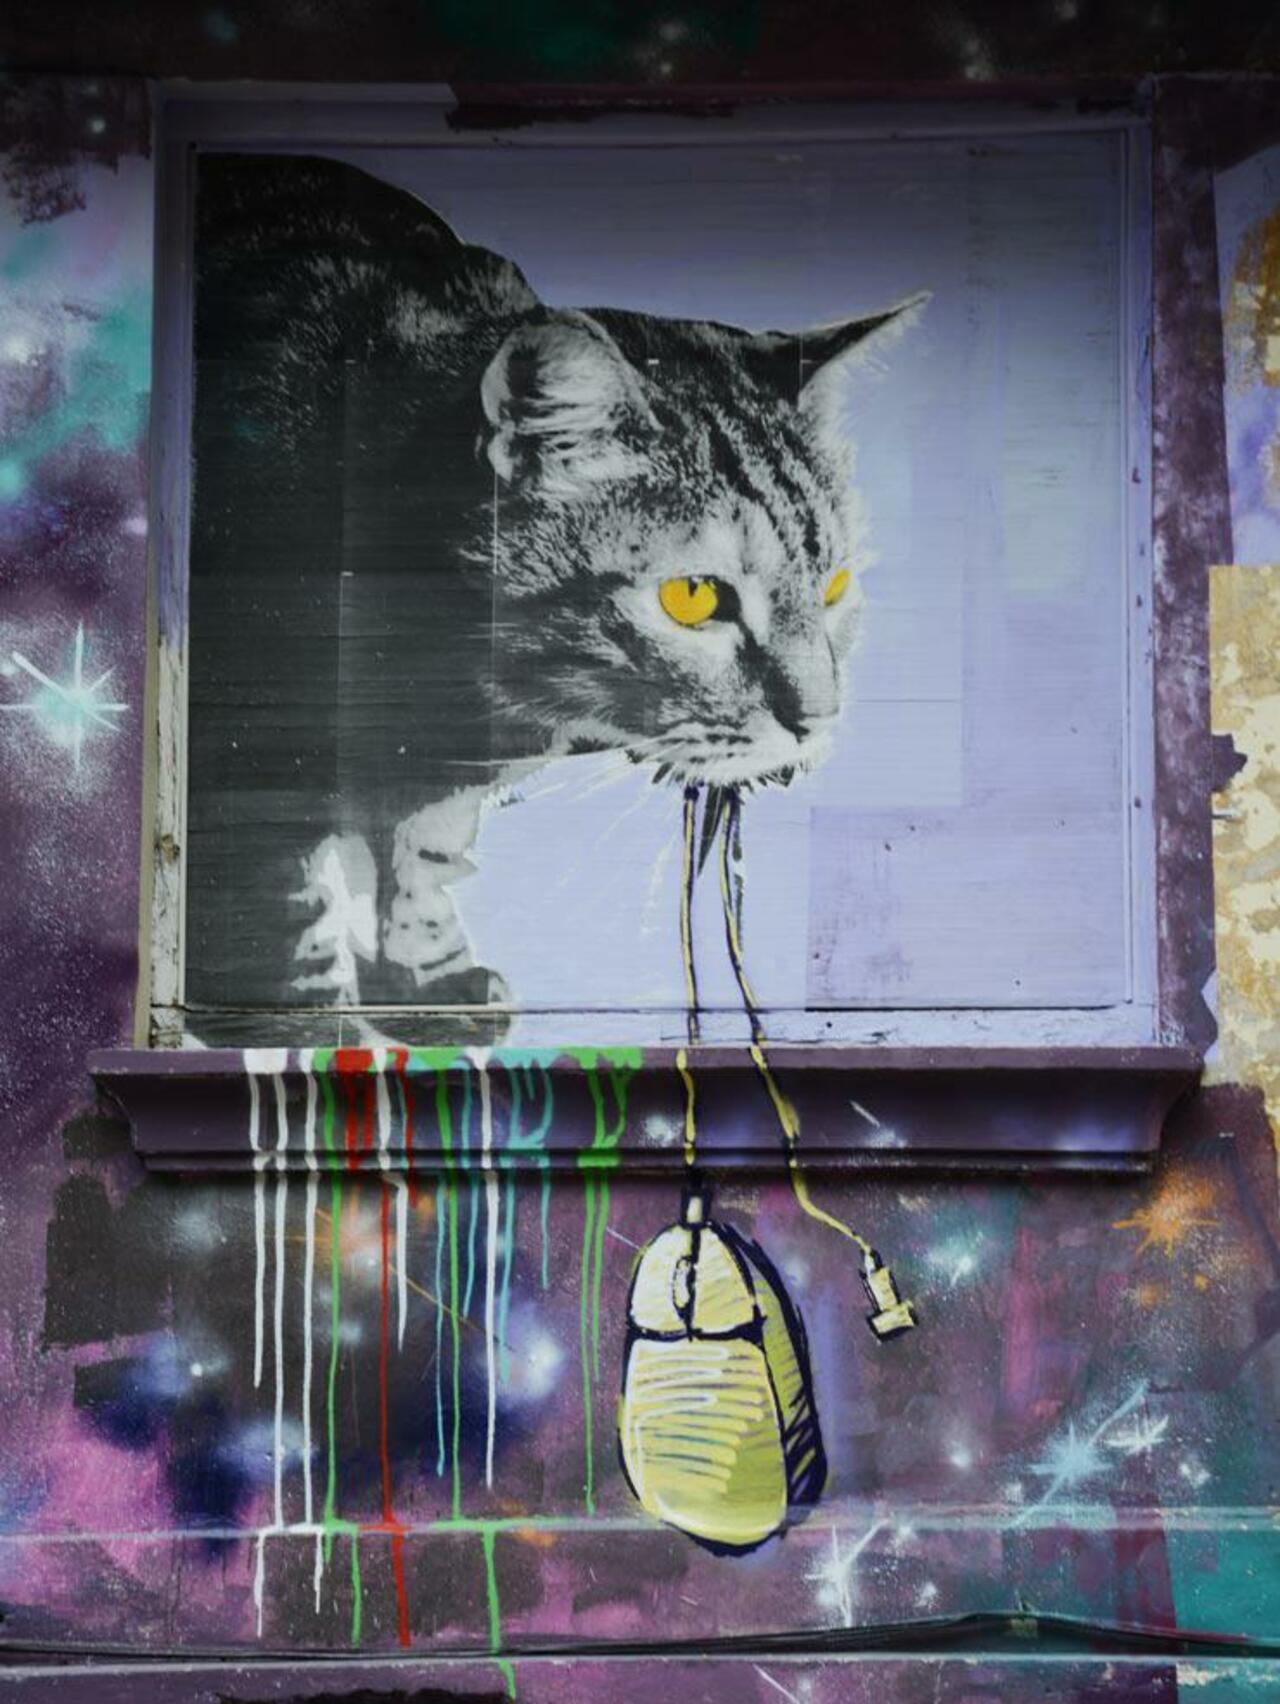 RT @city_z3n_0wl: Cat w/ mouse. Pamplona, Spain
#streetart #urbanart #graffiti http://t.co/v2mGXR2KEm